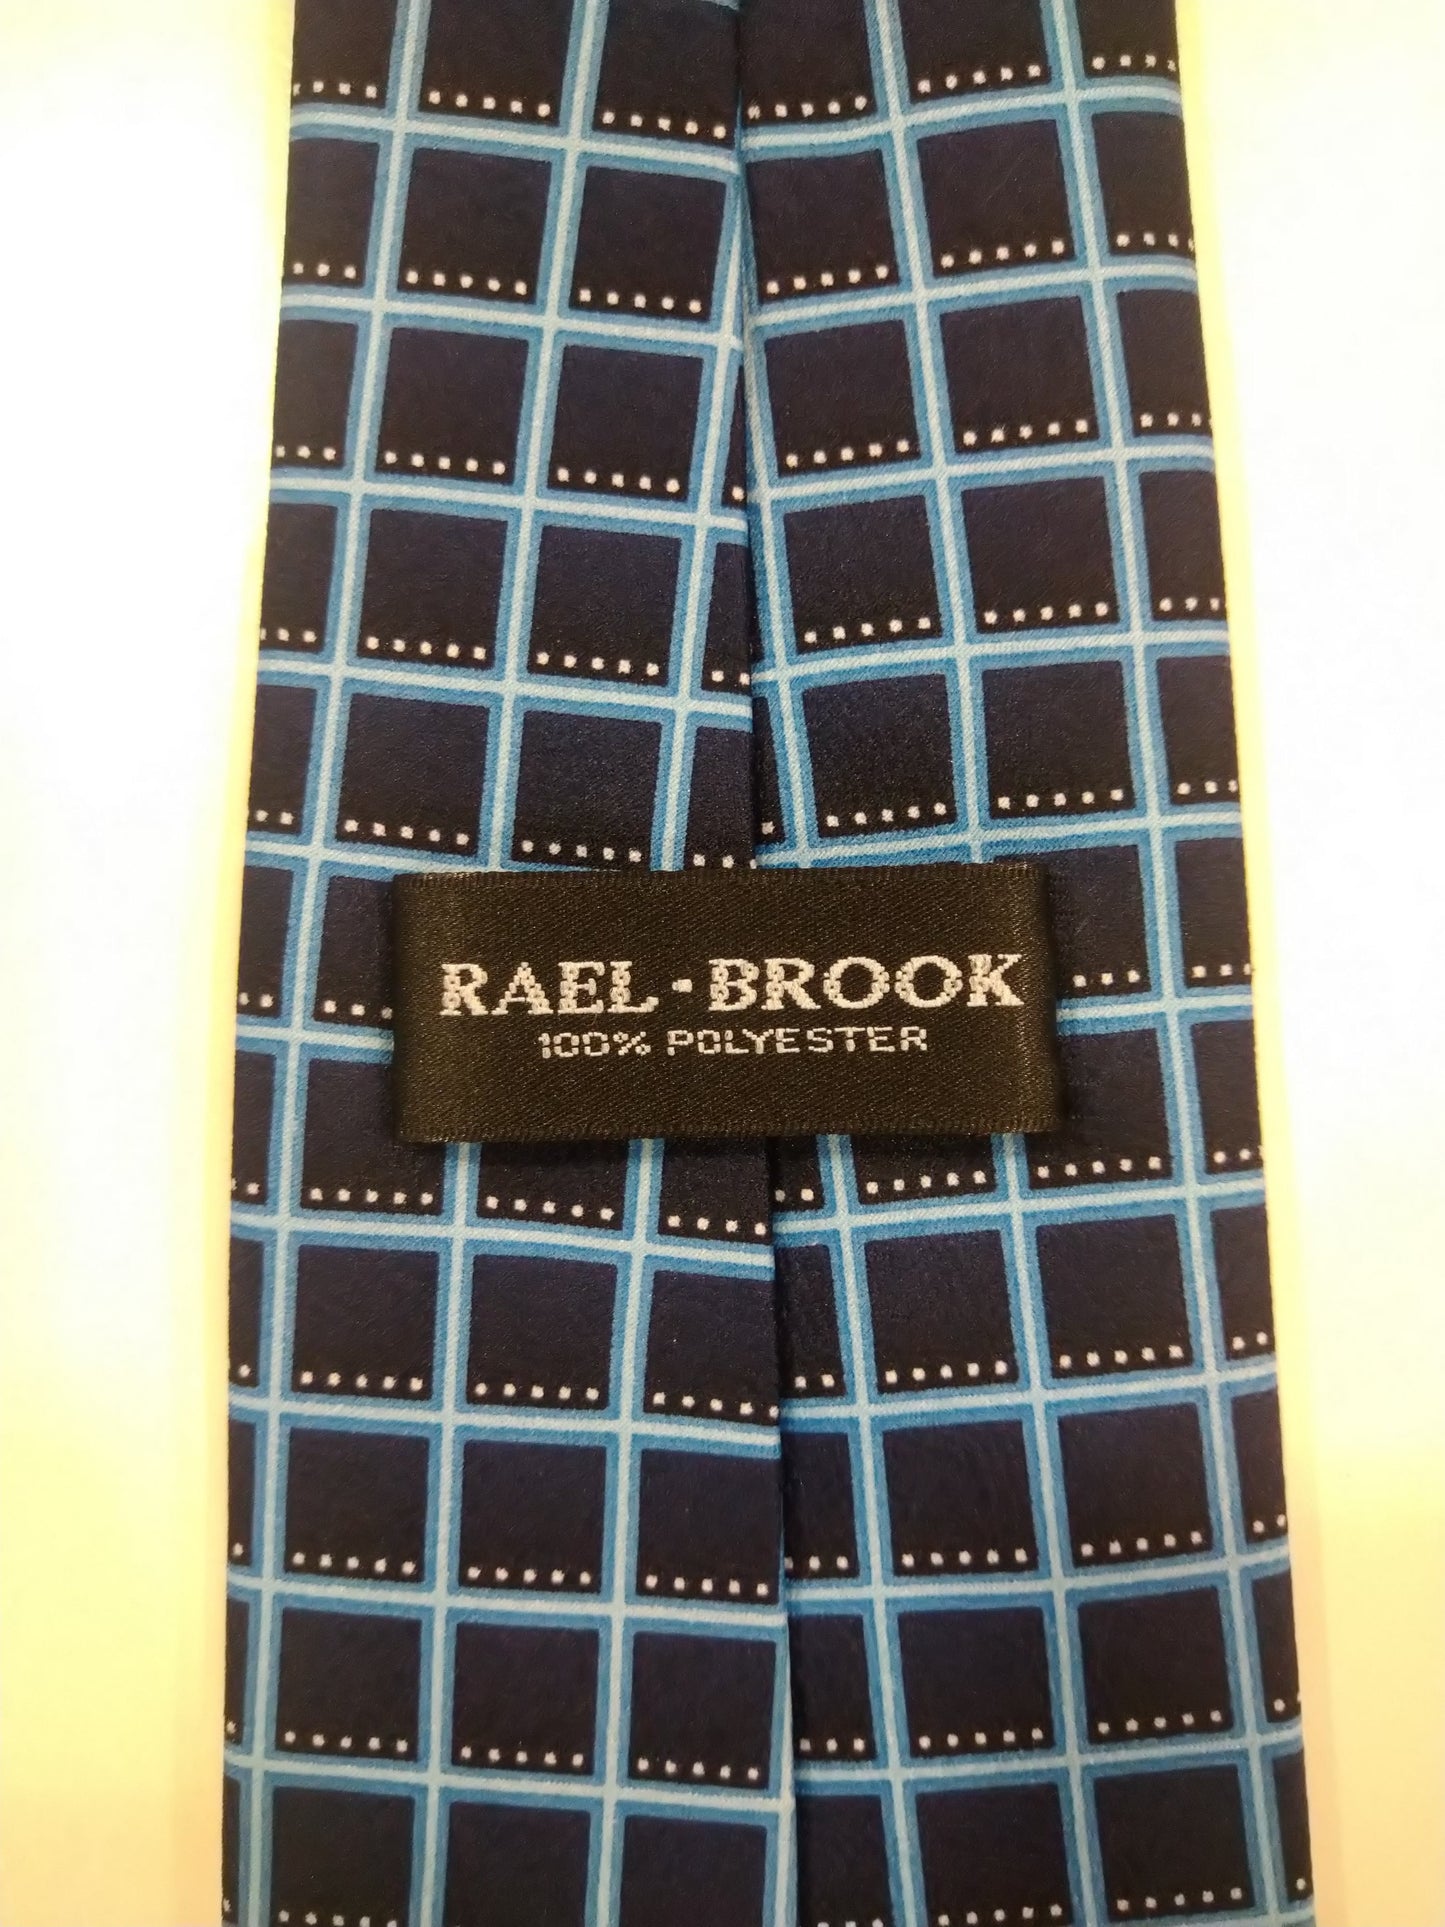 Rael Brook Polyester la corbata. Motivo cuadrado azul.